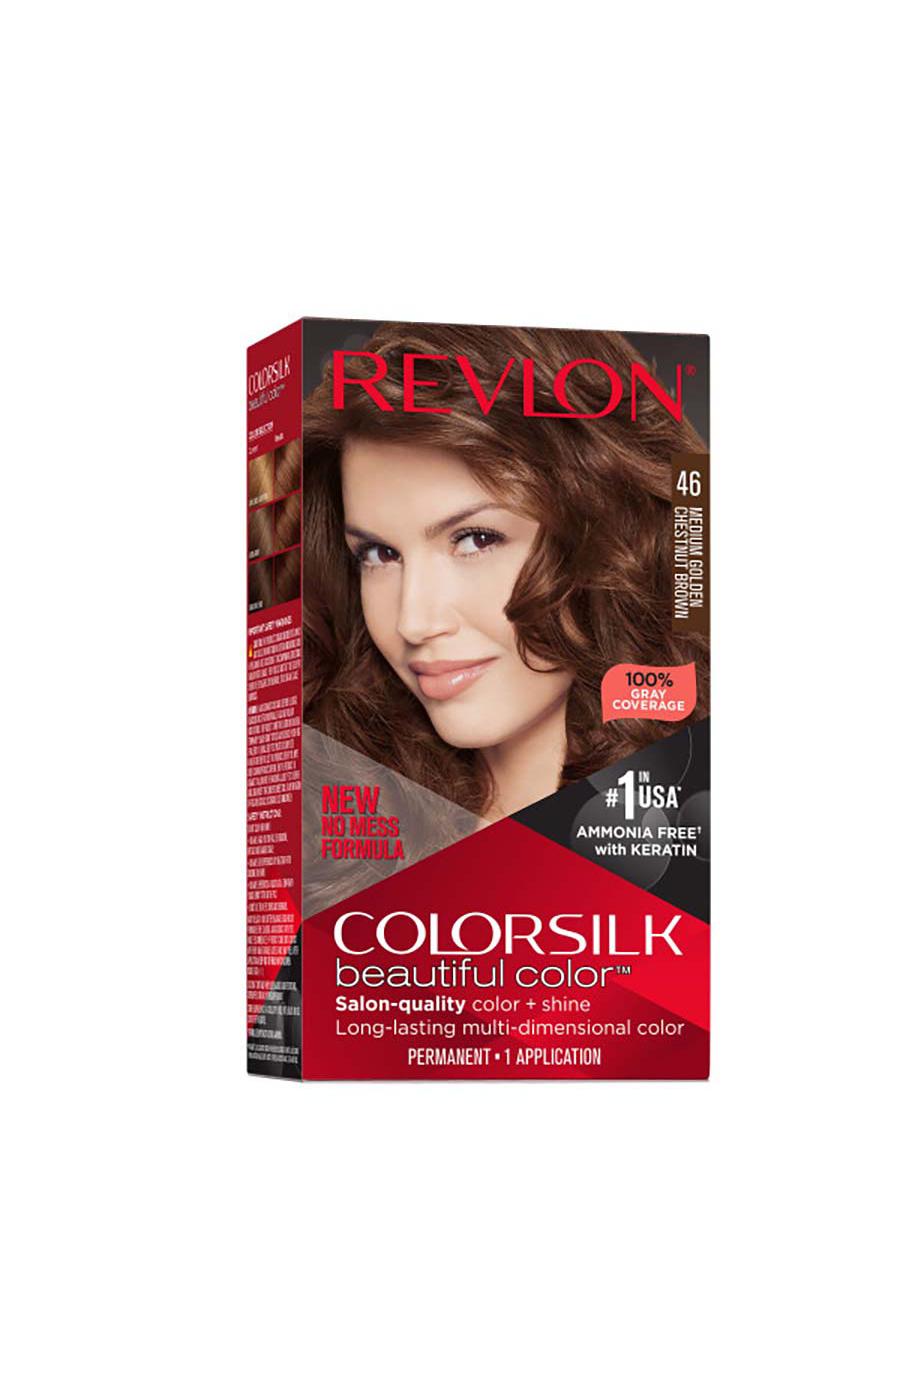 Revlon ColorSilk Hair Color - 46 Medium Gold Chestnut Brown; image 1 of 6